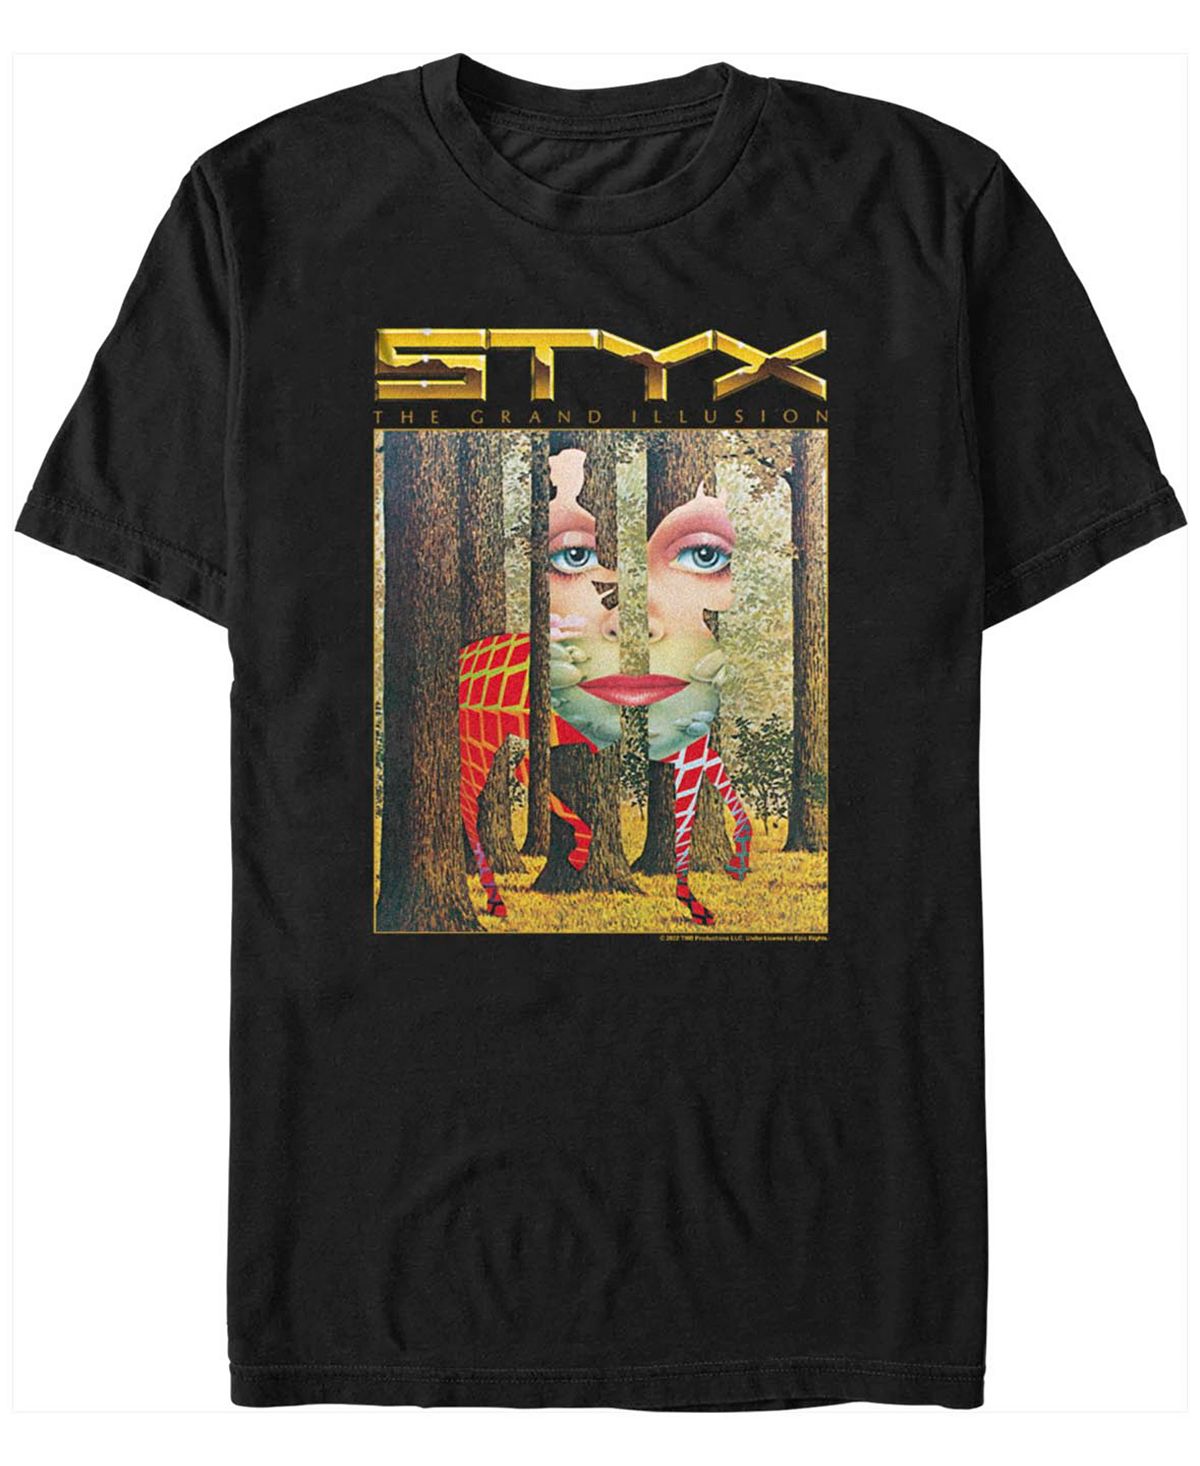 Мужская футболка с коротким рукавом styx the grand illusion Fifth Sun, черный